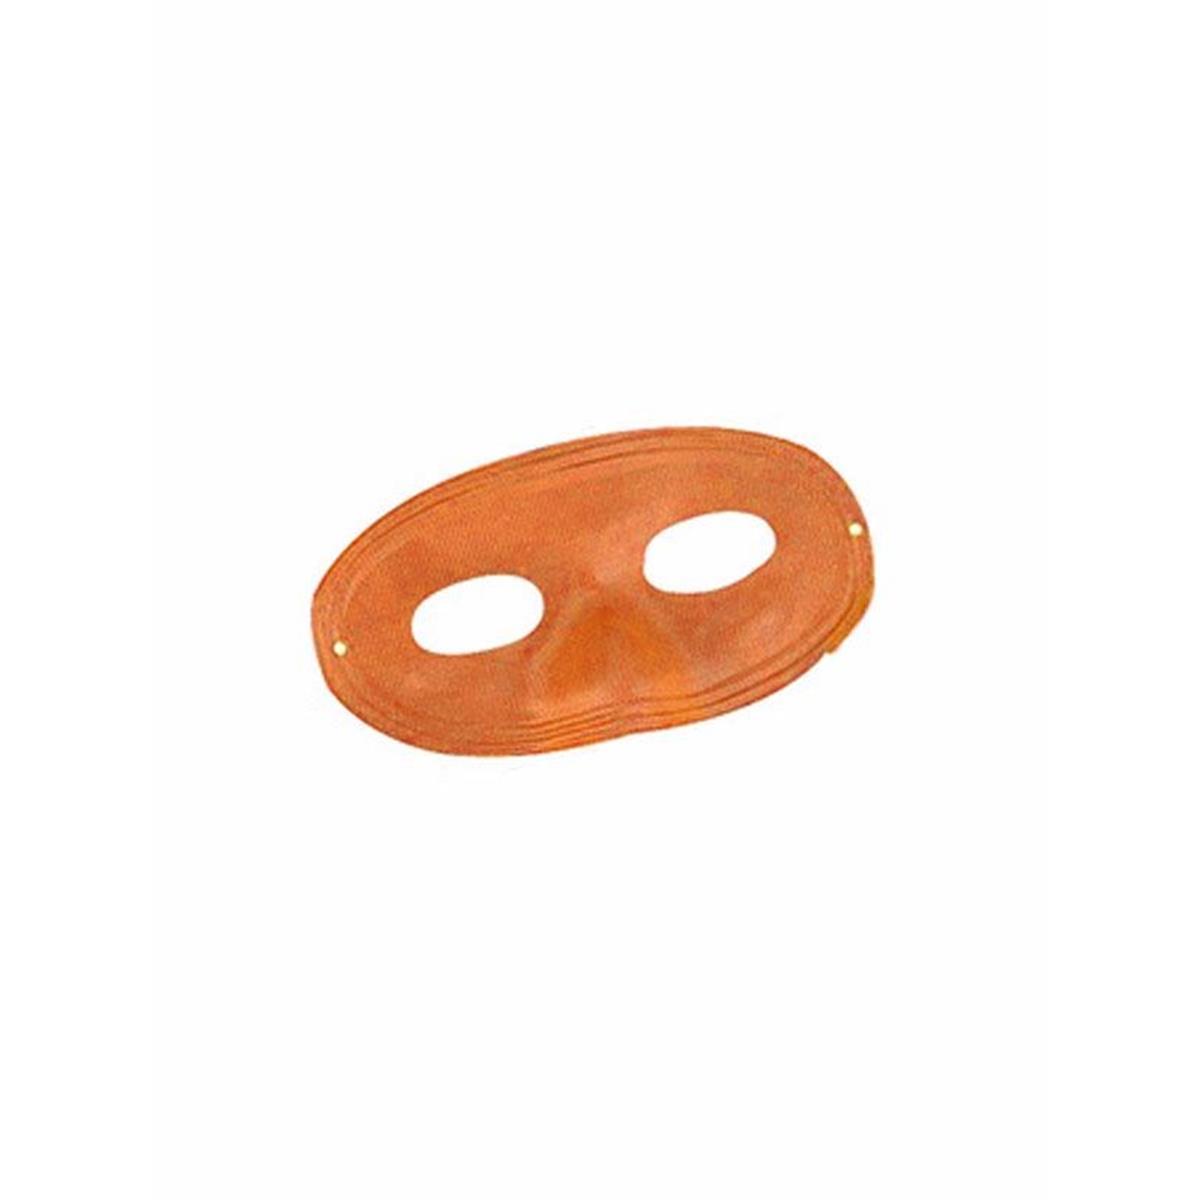 Picture of Buyseasons 283722 Orange Domino Mask